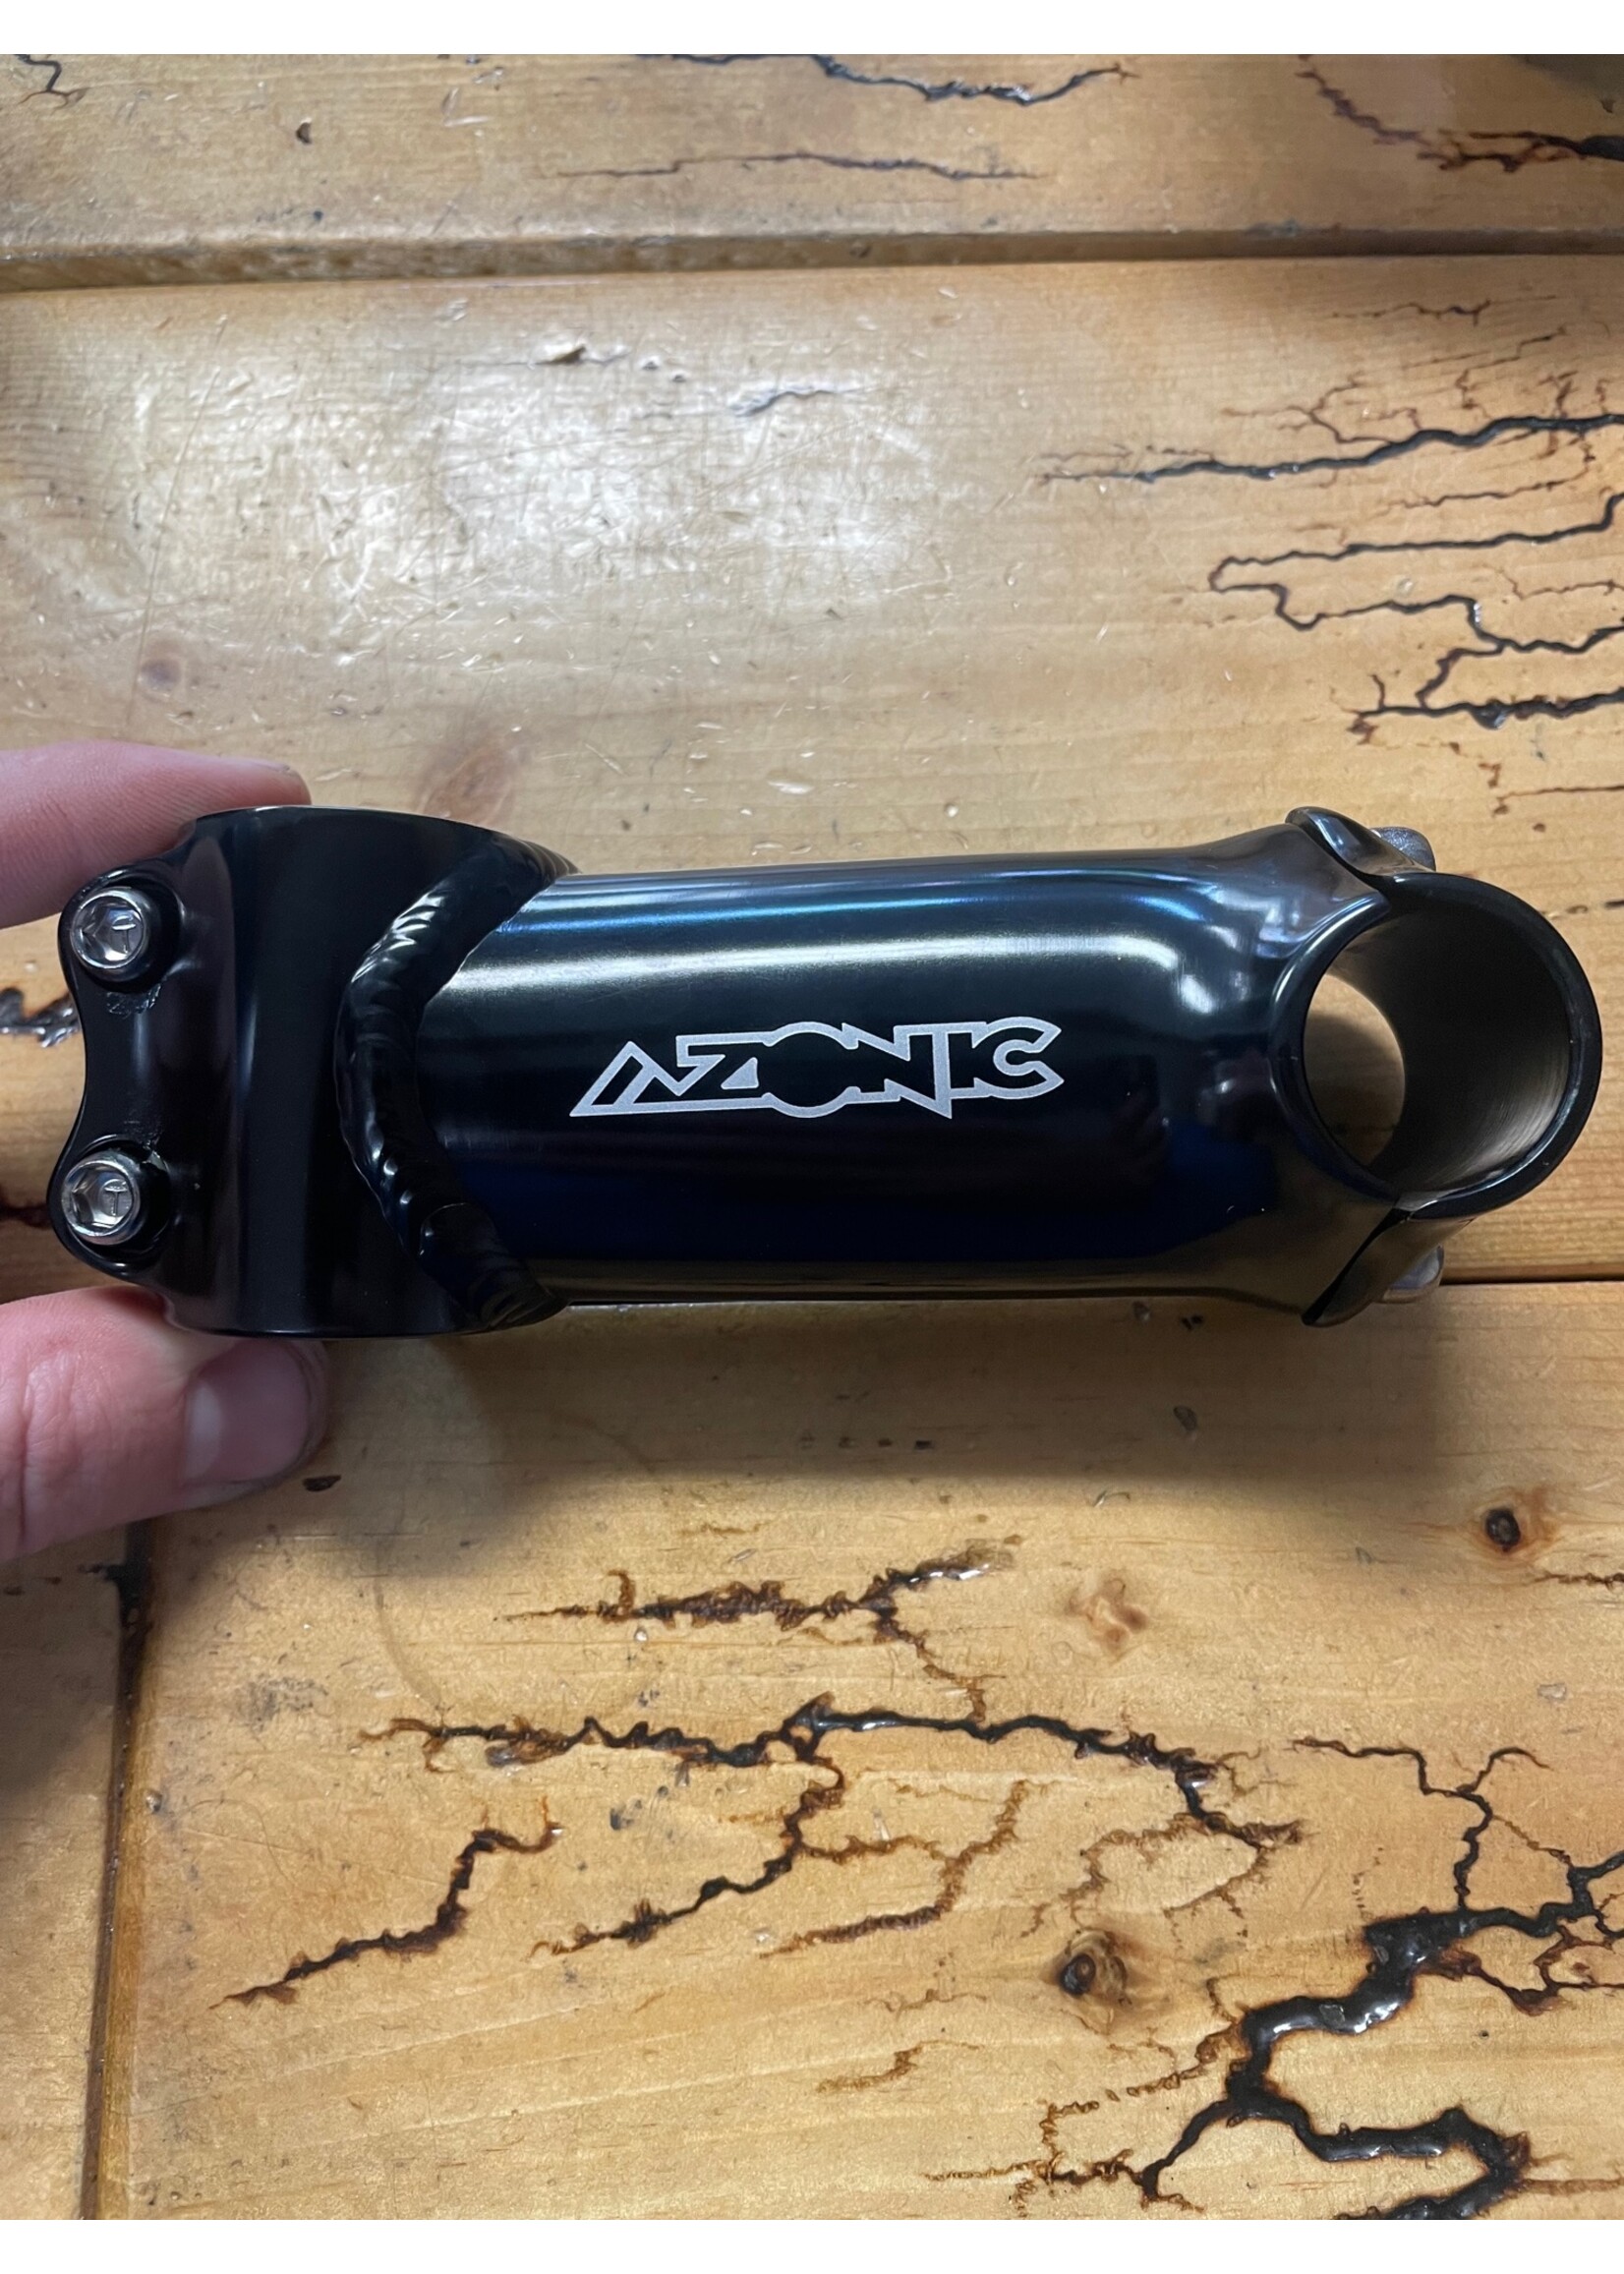 Azonic Azonic ORS 105mm Black 25.4mm 1 1/8 Threadless Stem